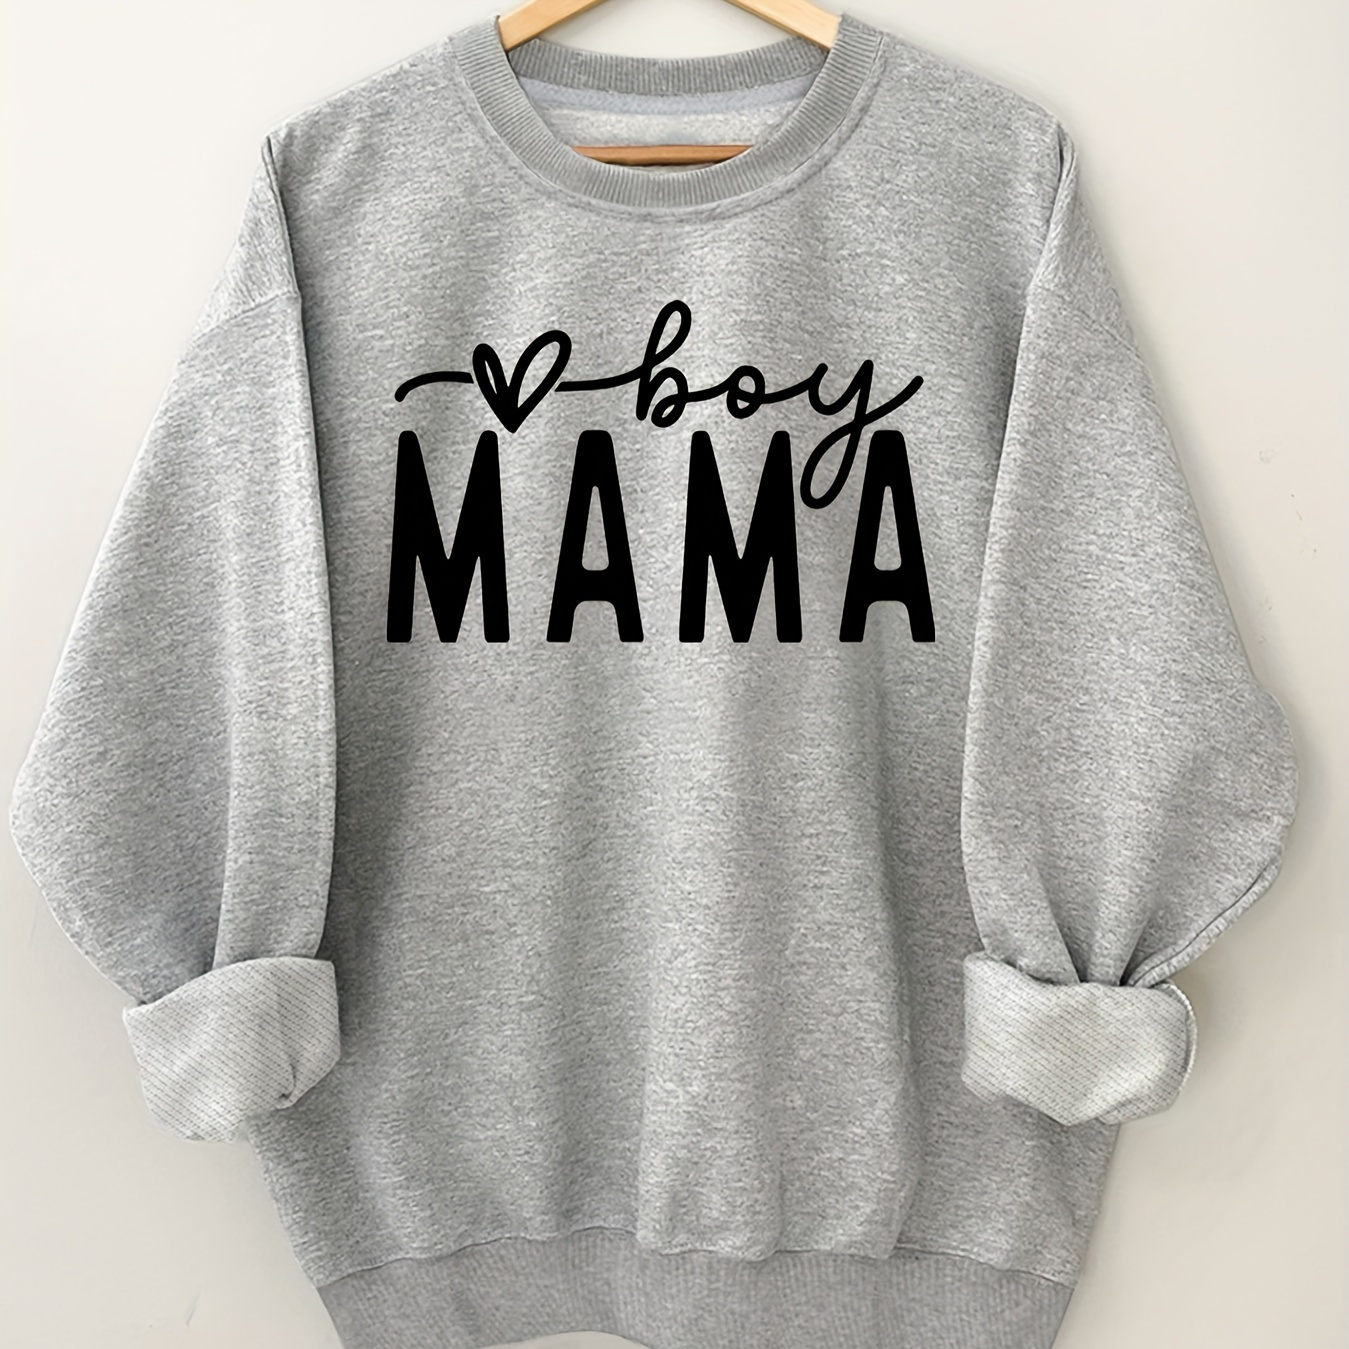 

Boy Mama Letter Print Sweatshirt, Crew Neck Casual Sweatshirt For Fall & Spring, Women's Clothing